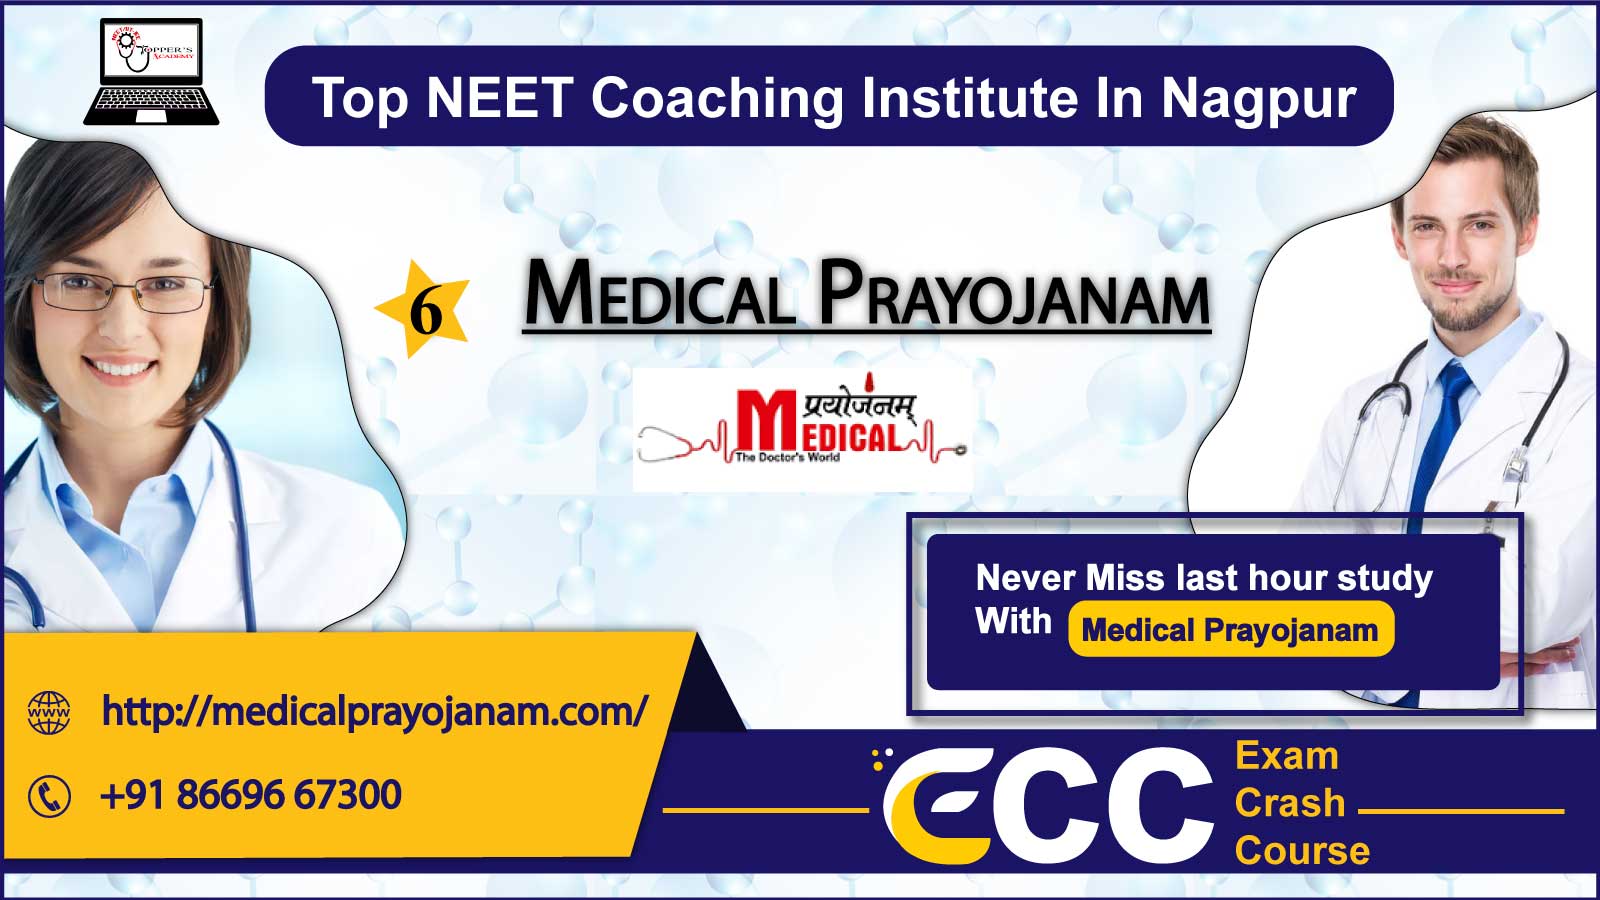 Medical Prayojanam NEET Coaching In Nagpur